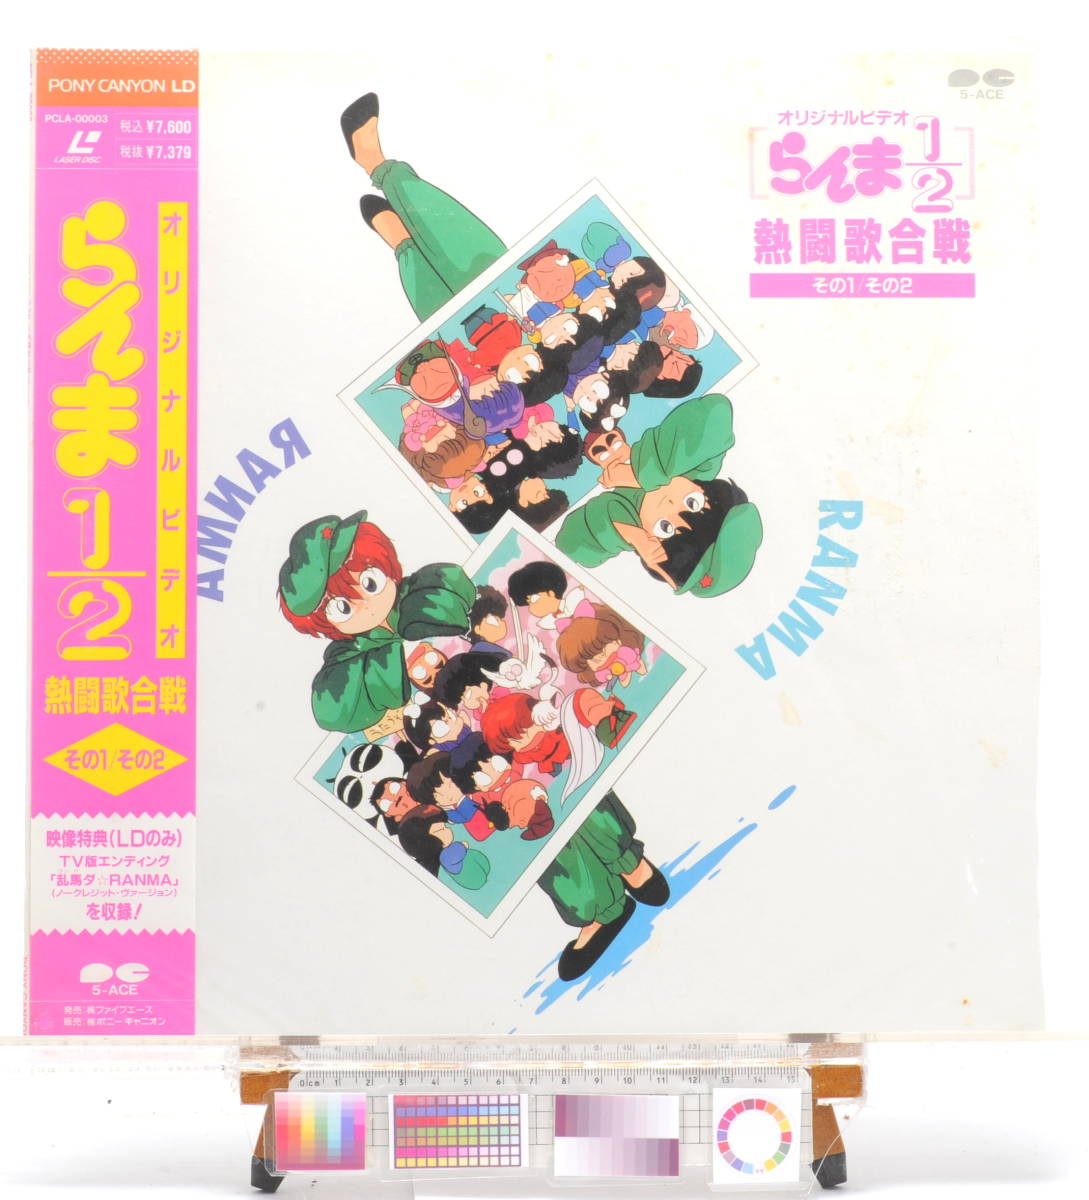 [Delivery Free]1992 Ranma1/2 Singing Contest(Rumiko Takahashi)LaserDisc,Jacket[Bonus:LD SOFT]らんま1/2熱闘歌合戦(高橋留美子)[tagLD